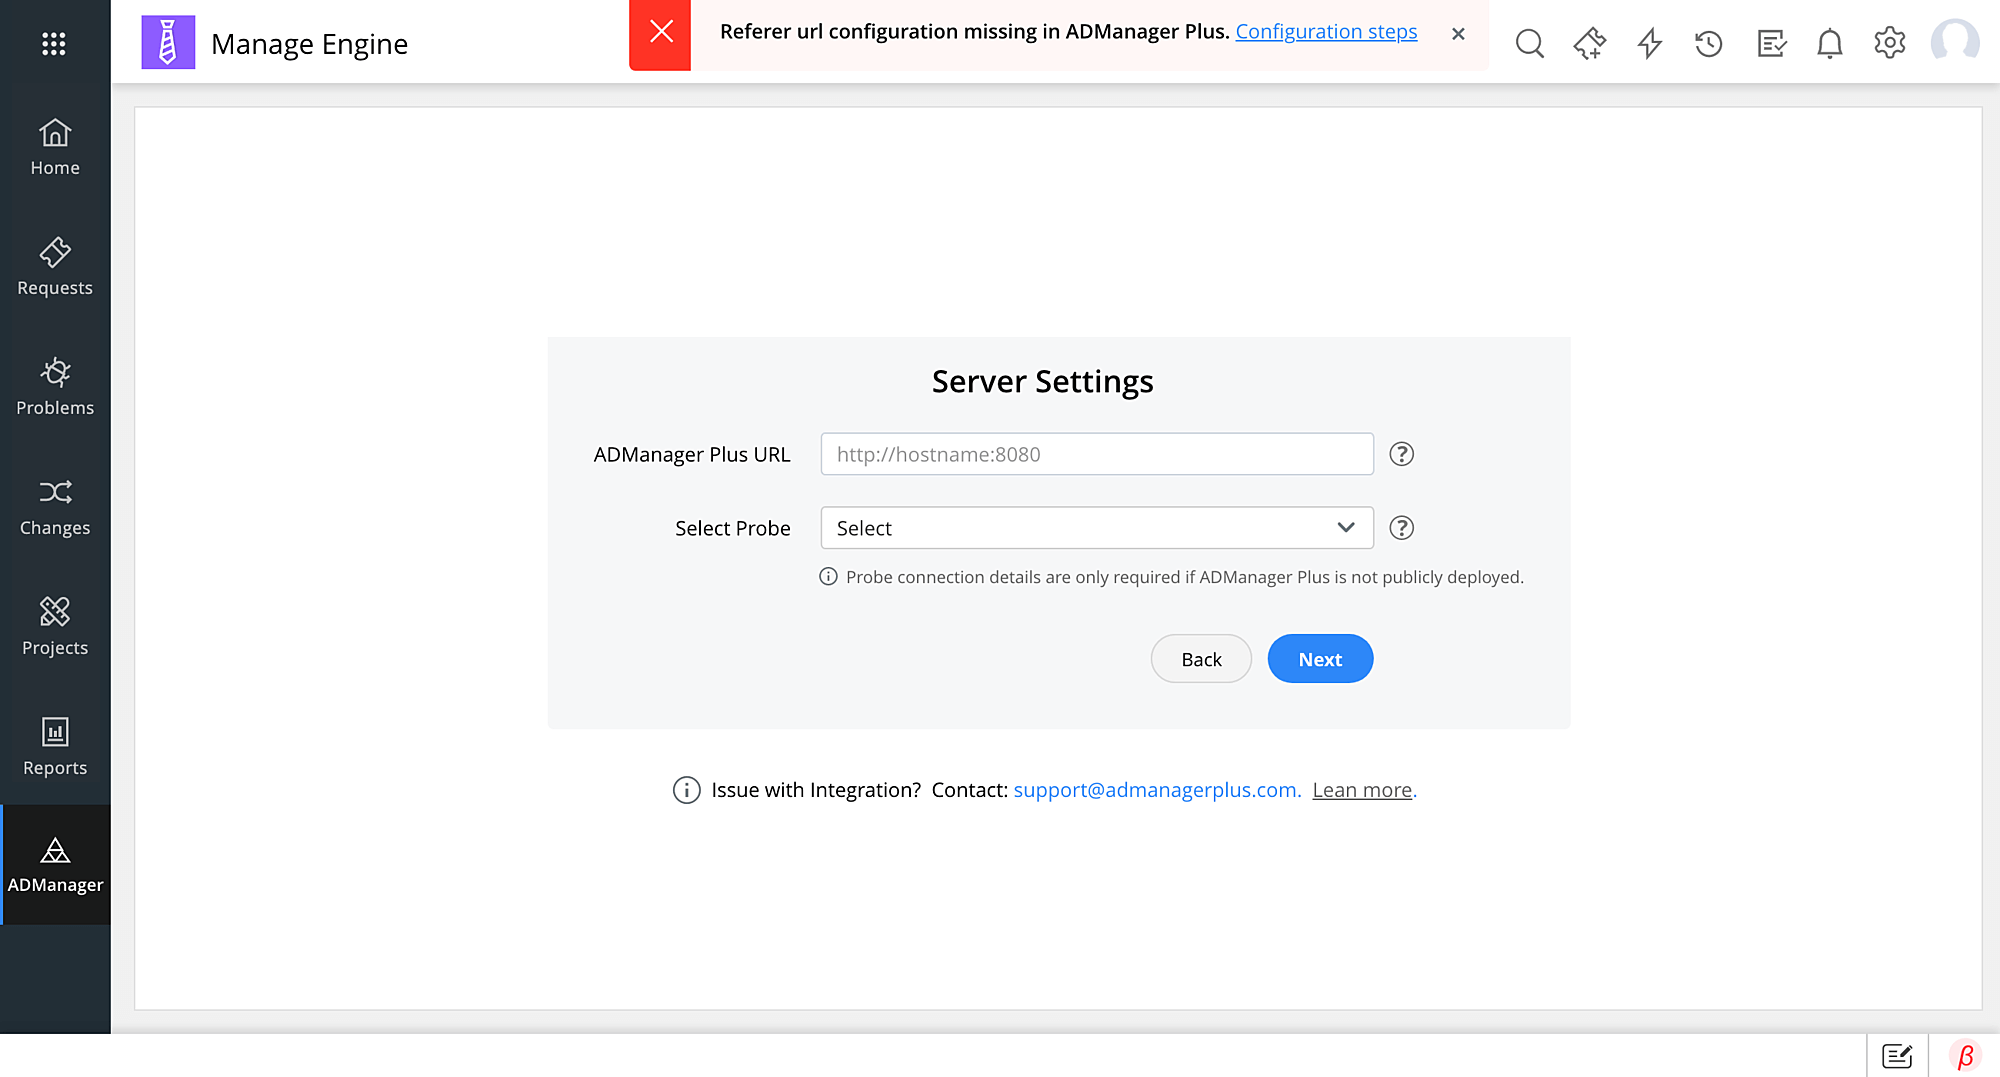 ServiceDesk Plus Cloud settings